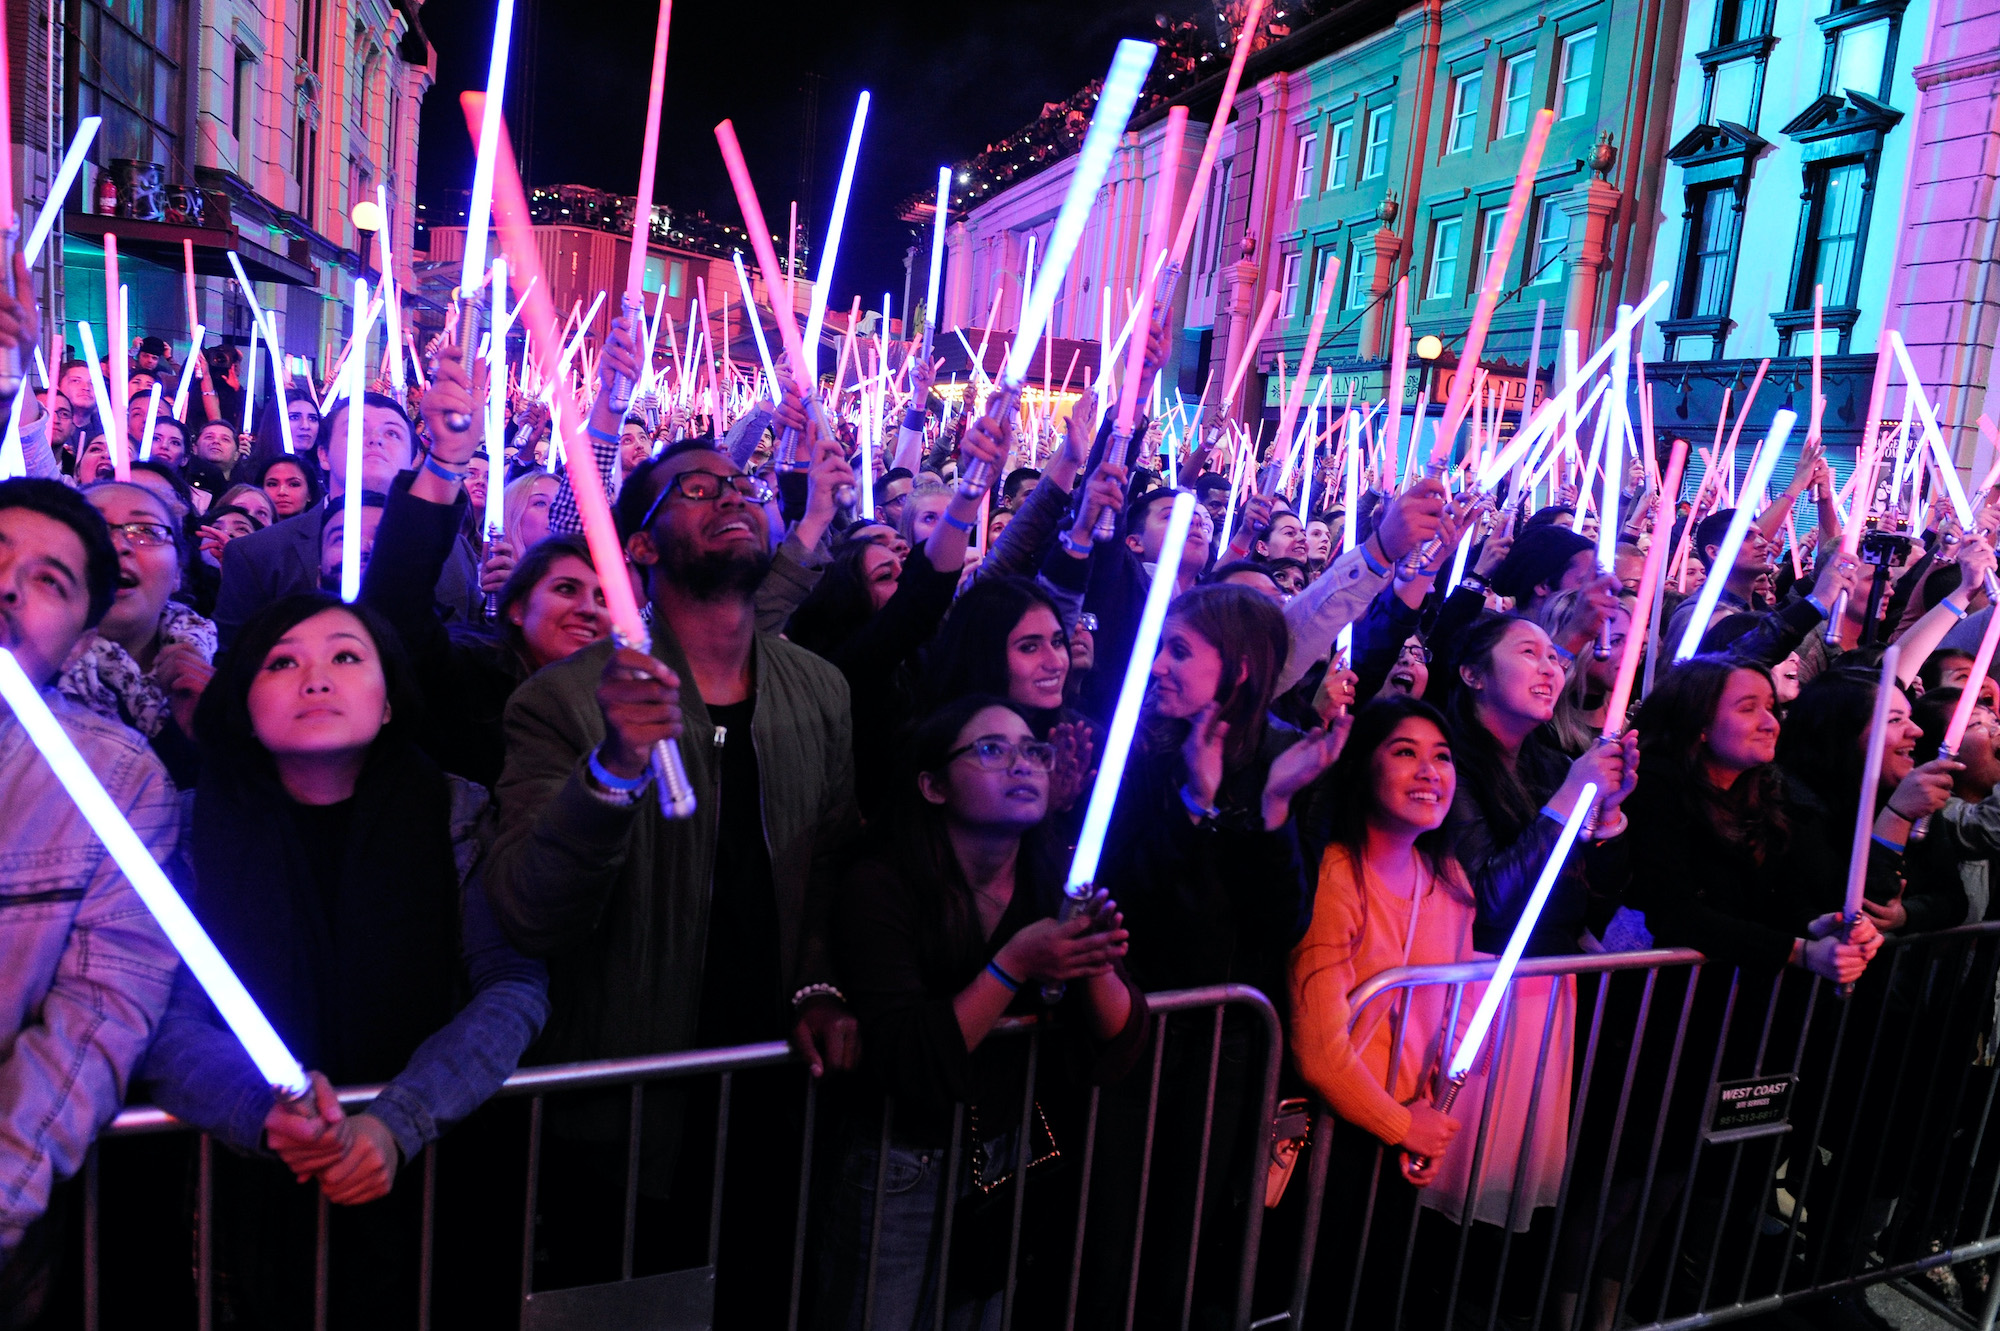 Fans wave Star Wars lightsabers